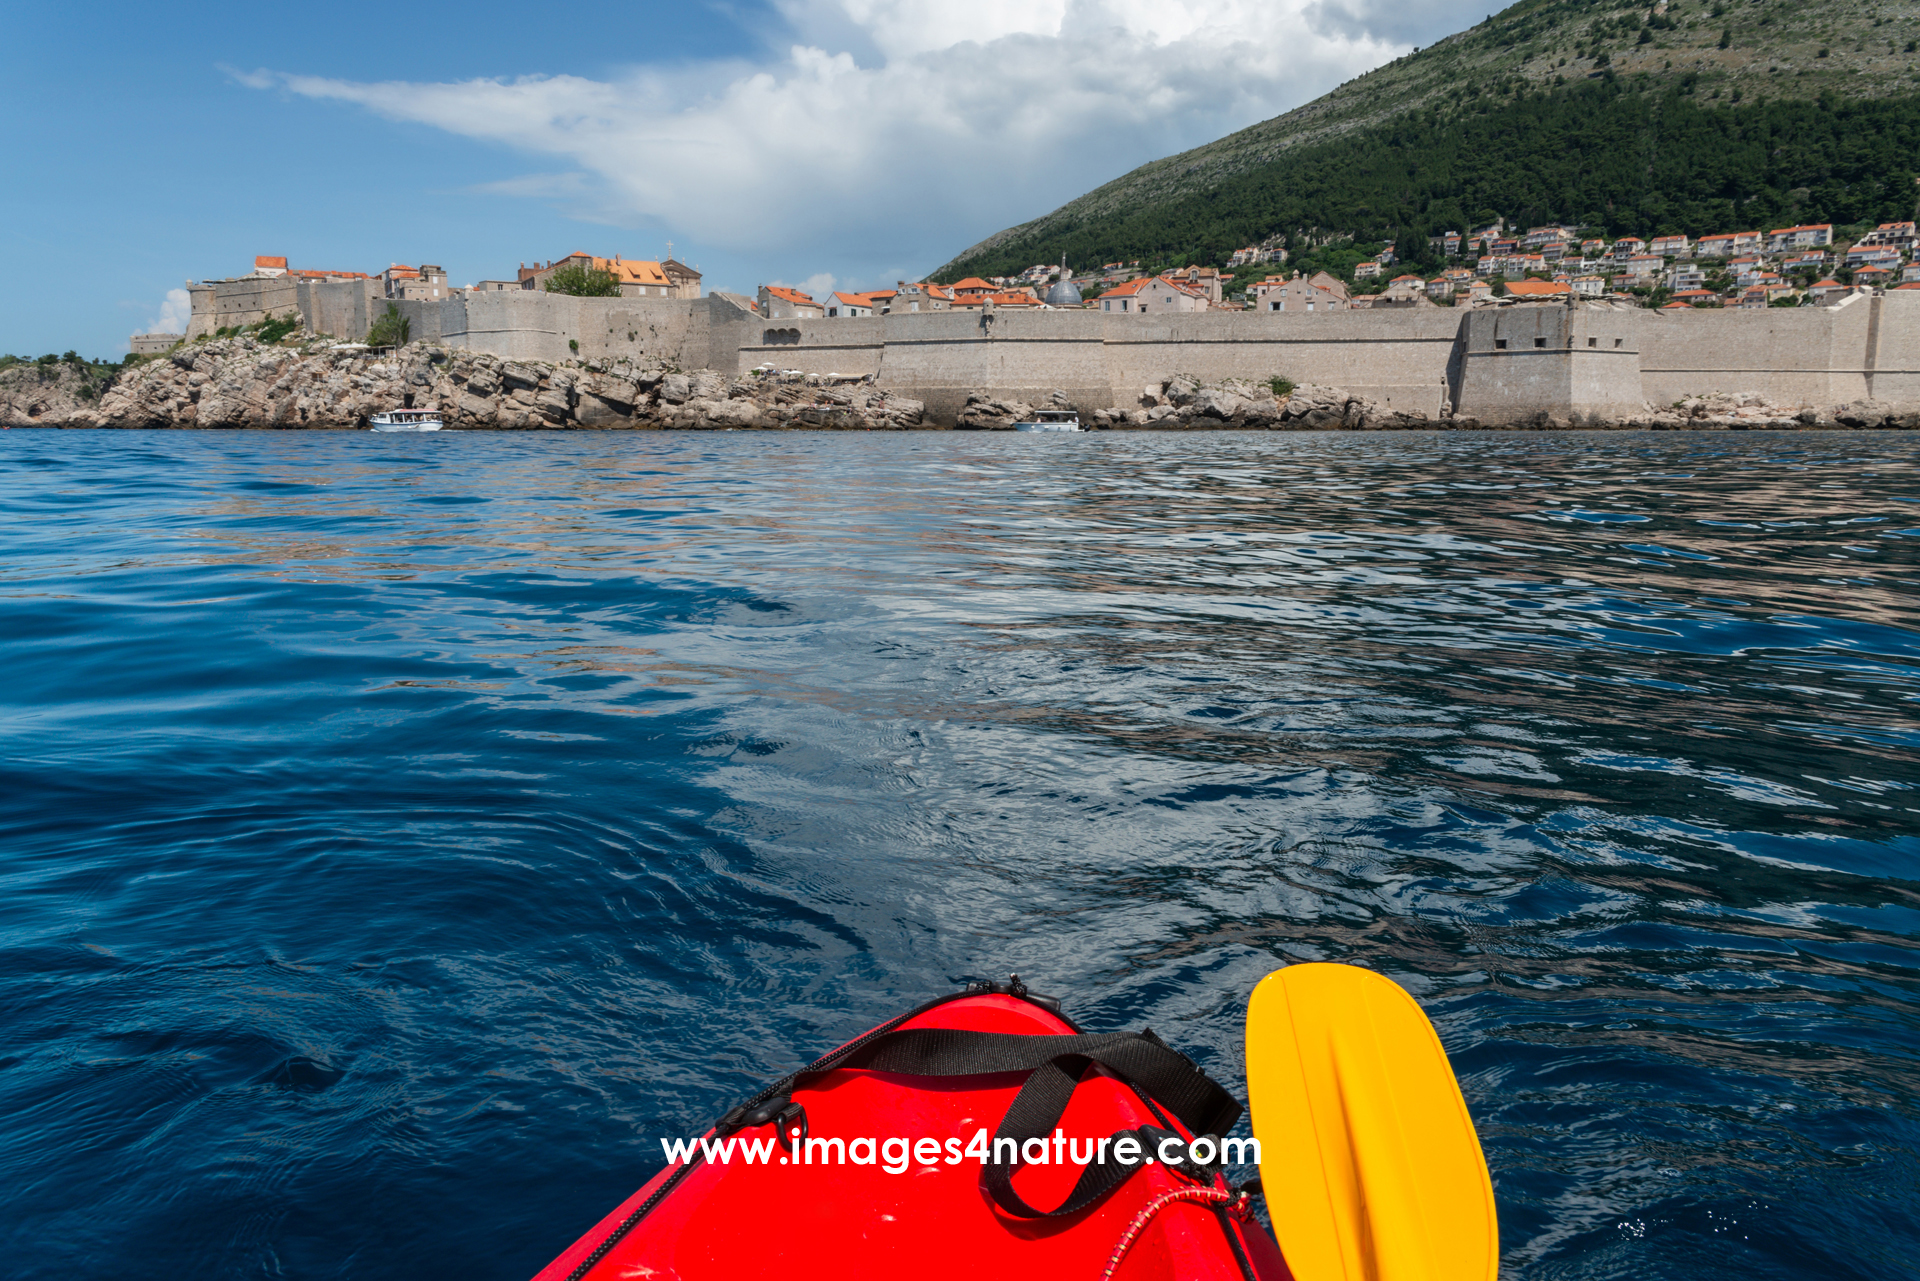 Red kayak and yellow paddle at sea, facing Dubrovnik city walls